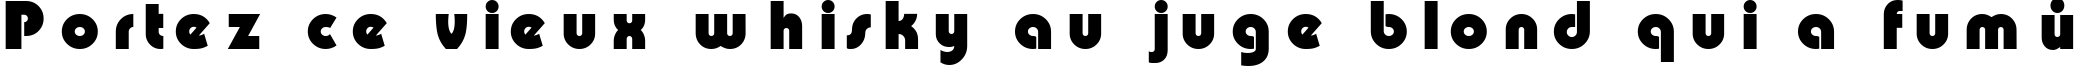 Пример написания шрифтом DG_Pump текста на французском